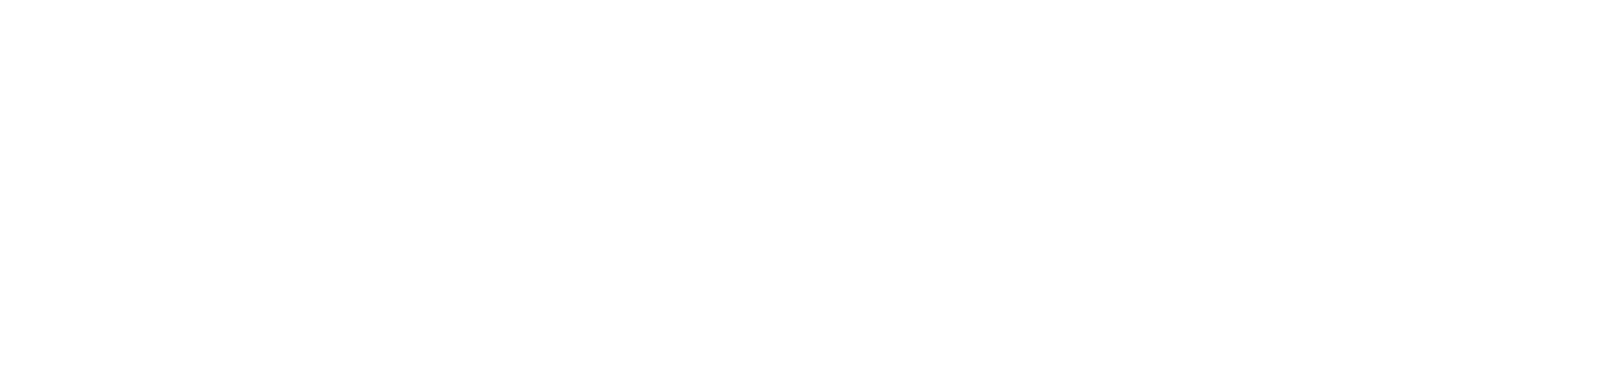 Circa Logo - Reverse.png